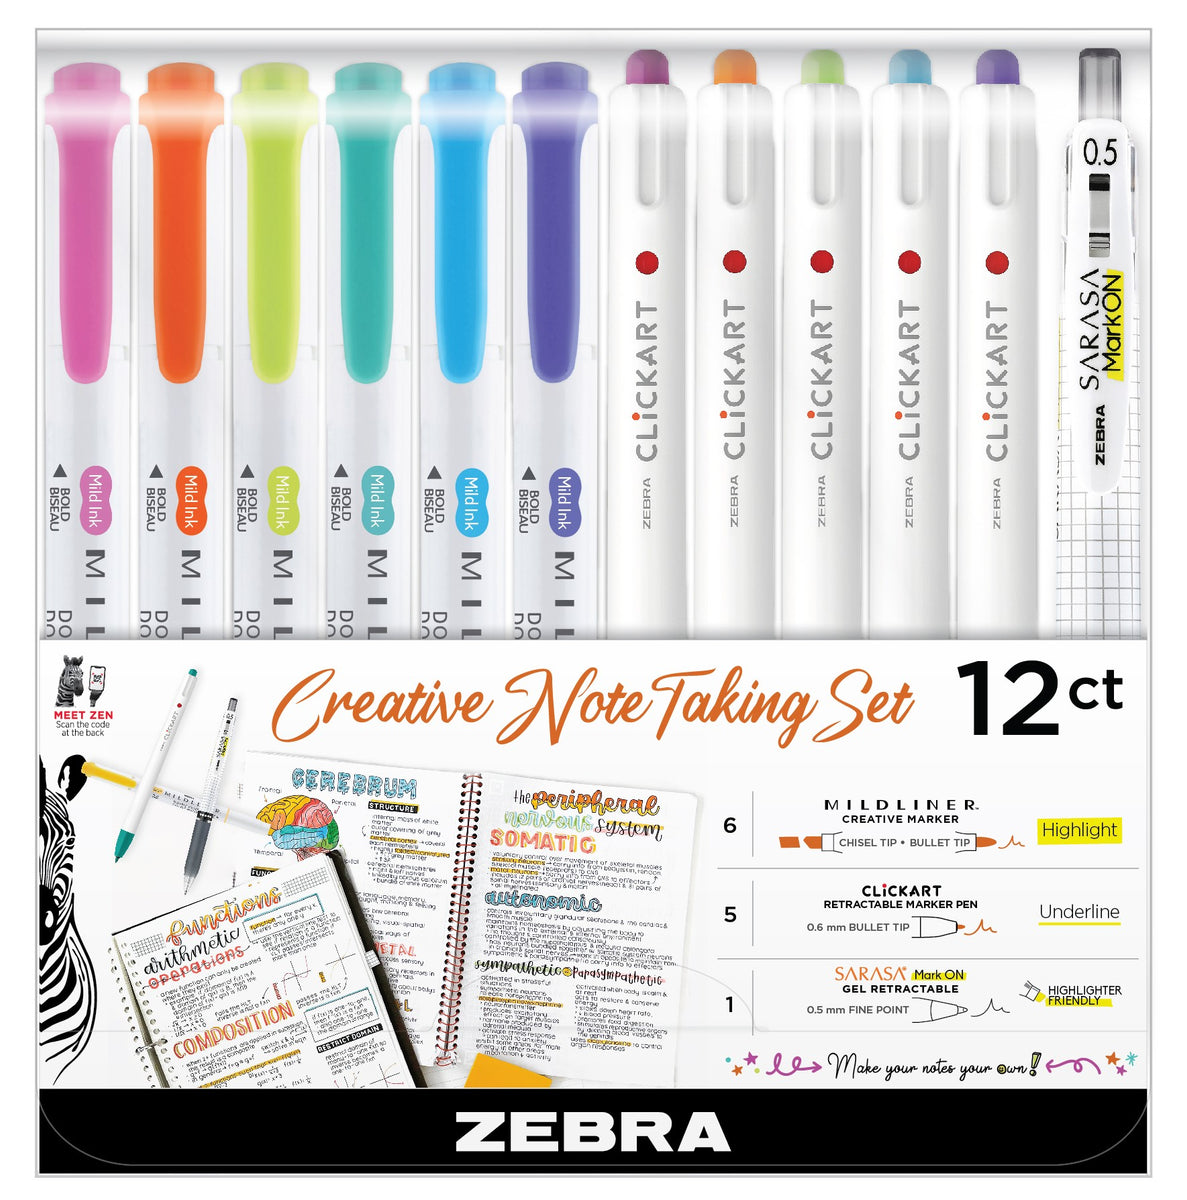 Zebra Mildliner Highlighter -Yellow Pack -WKT7-5C-RC - Smooth Pens